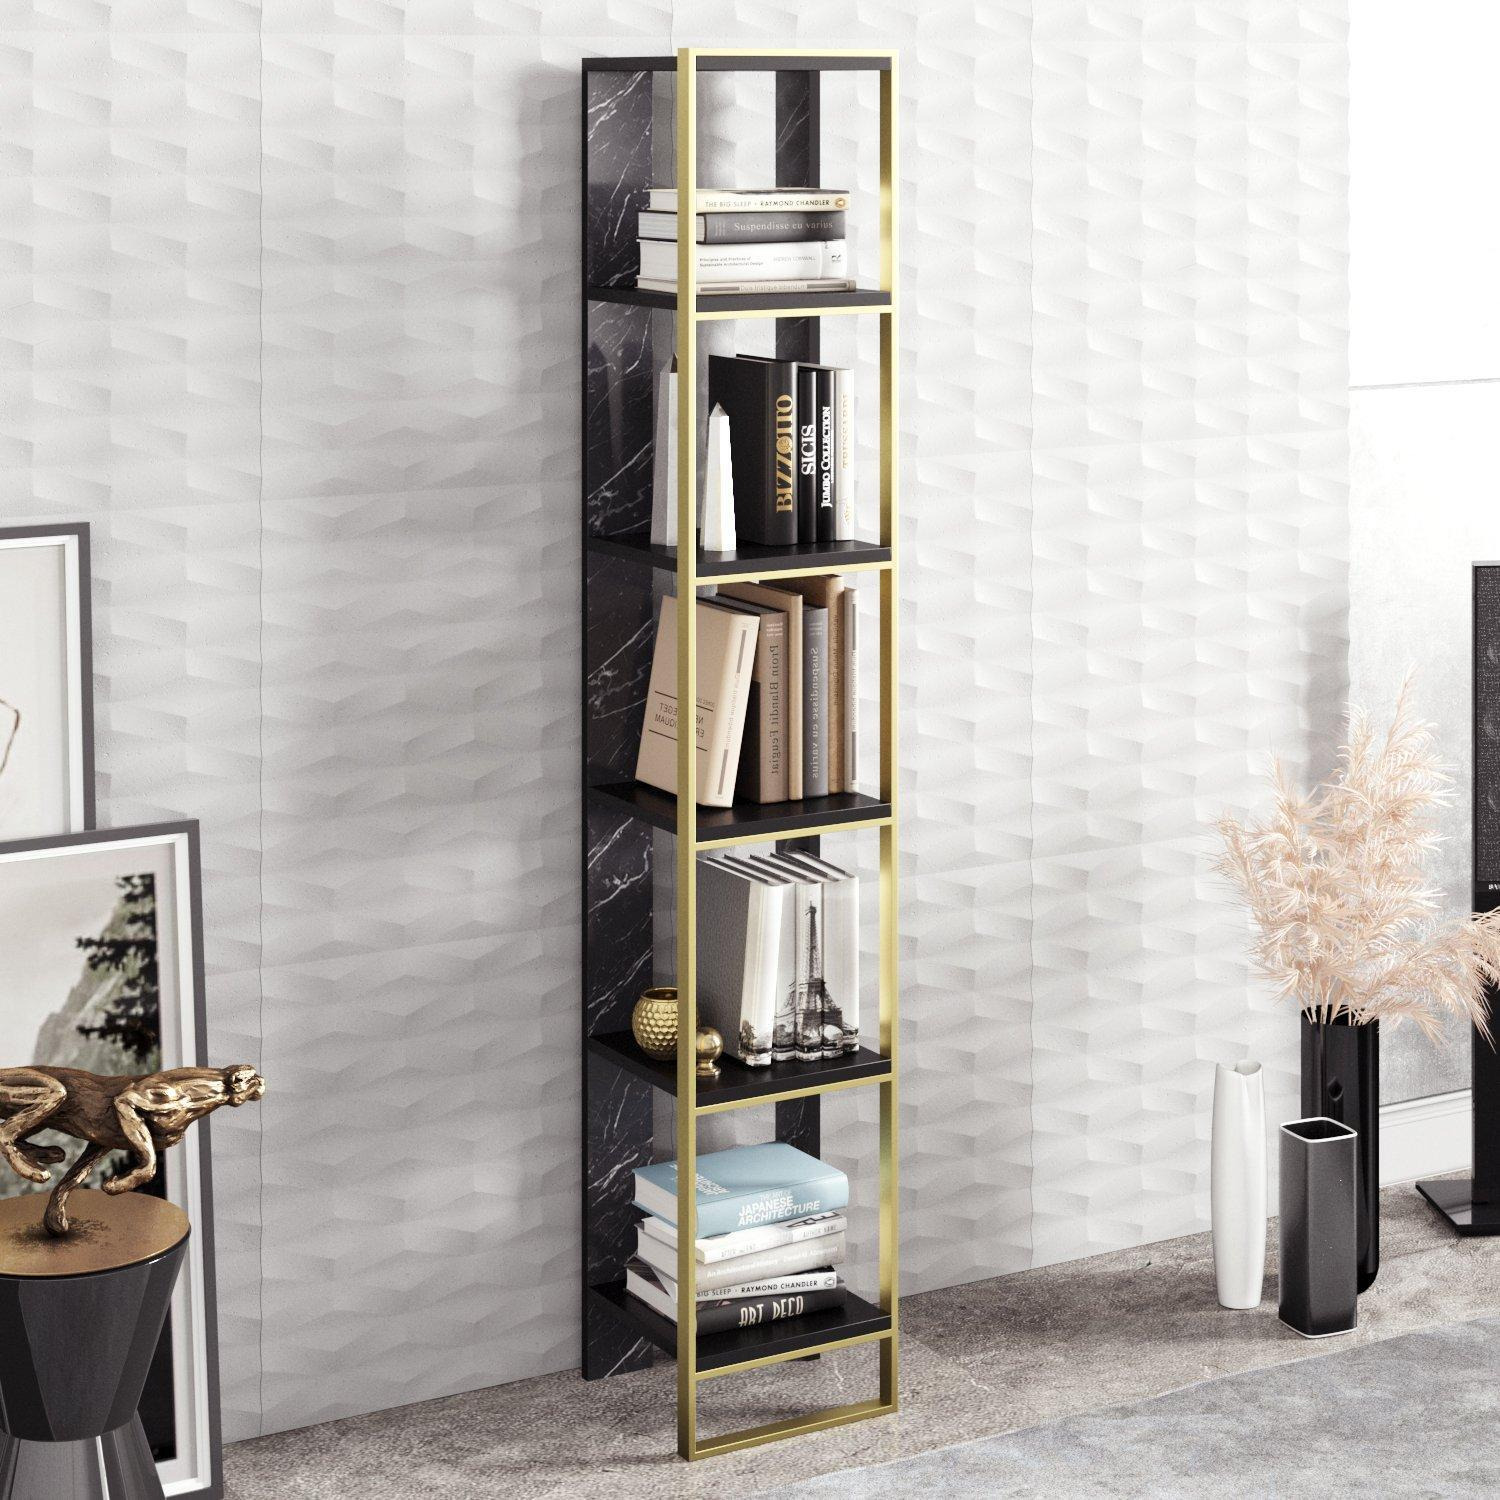 Polka 5-tier Bookcase Shelving Unit - image 1